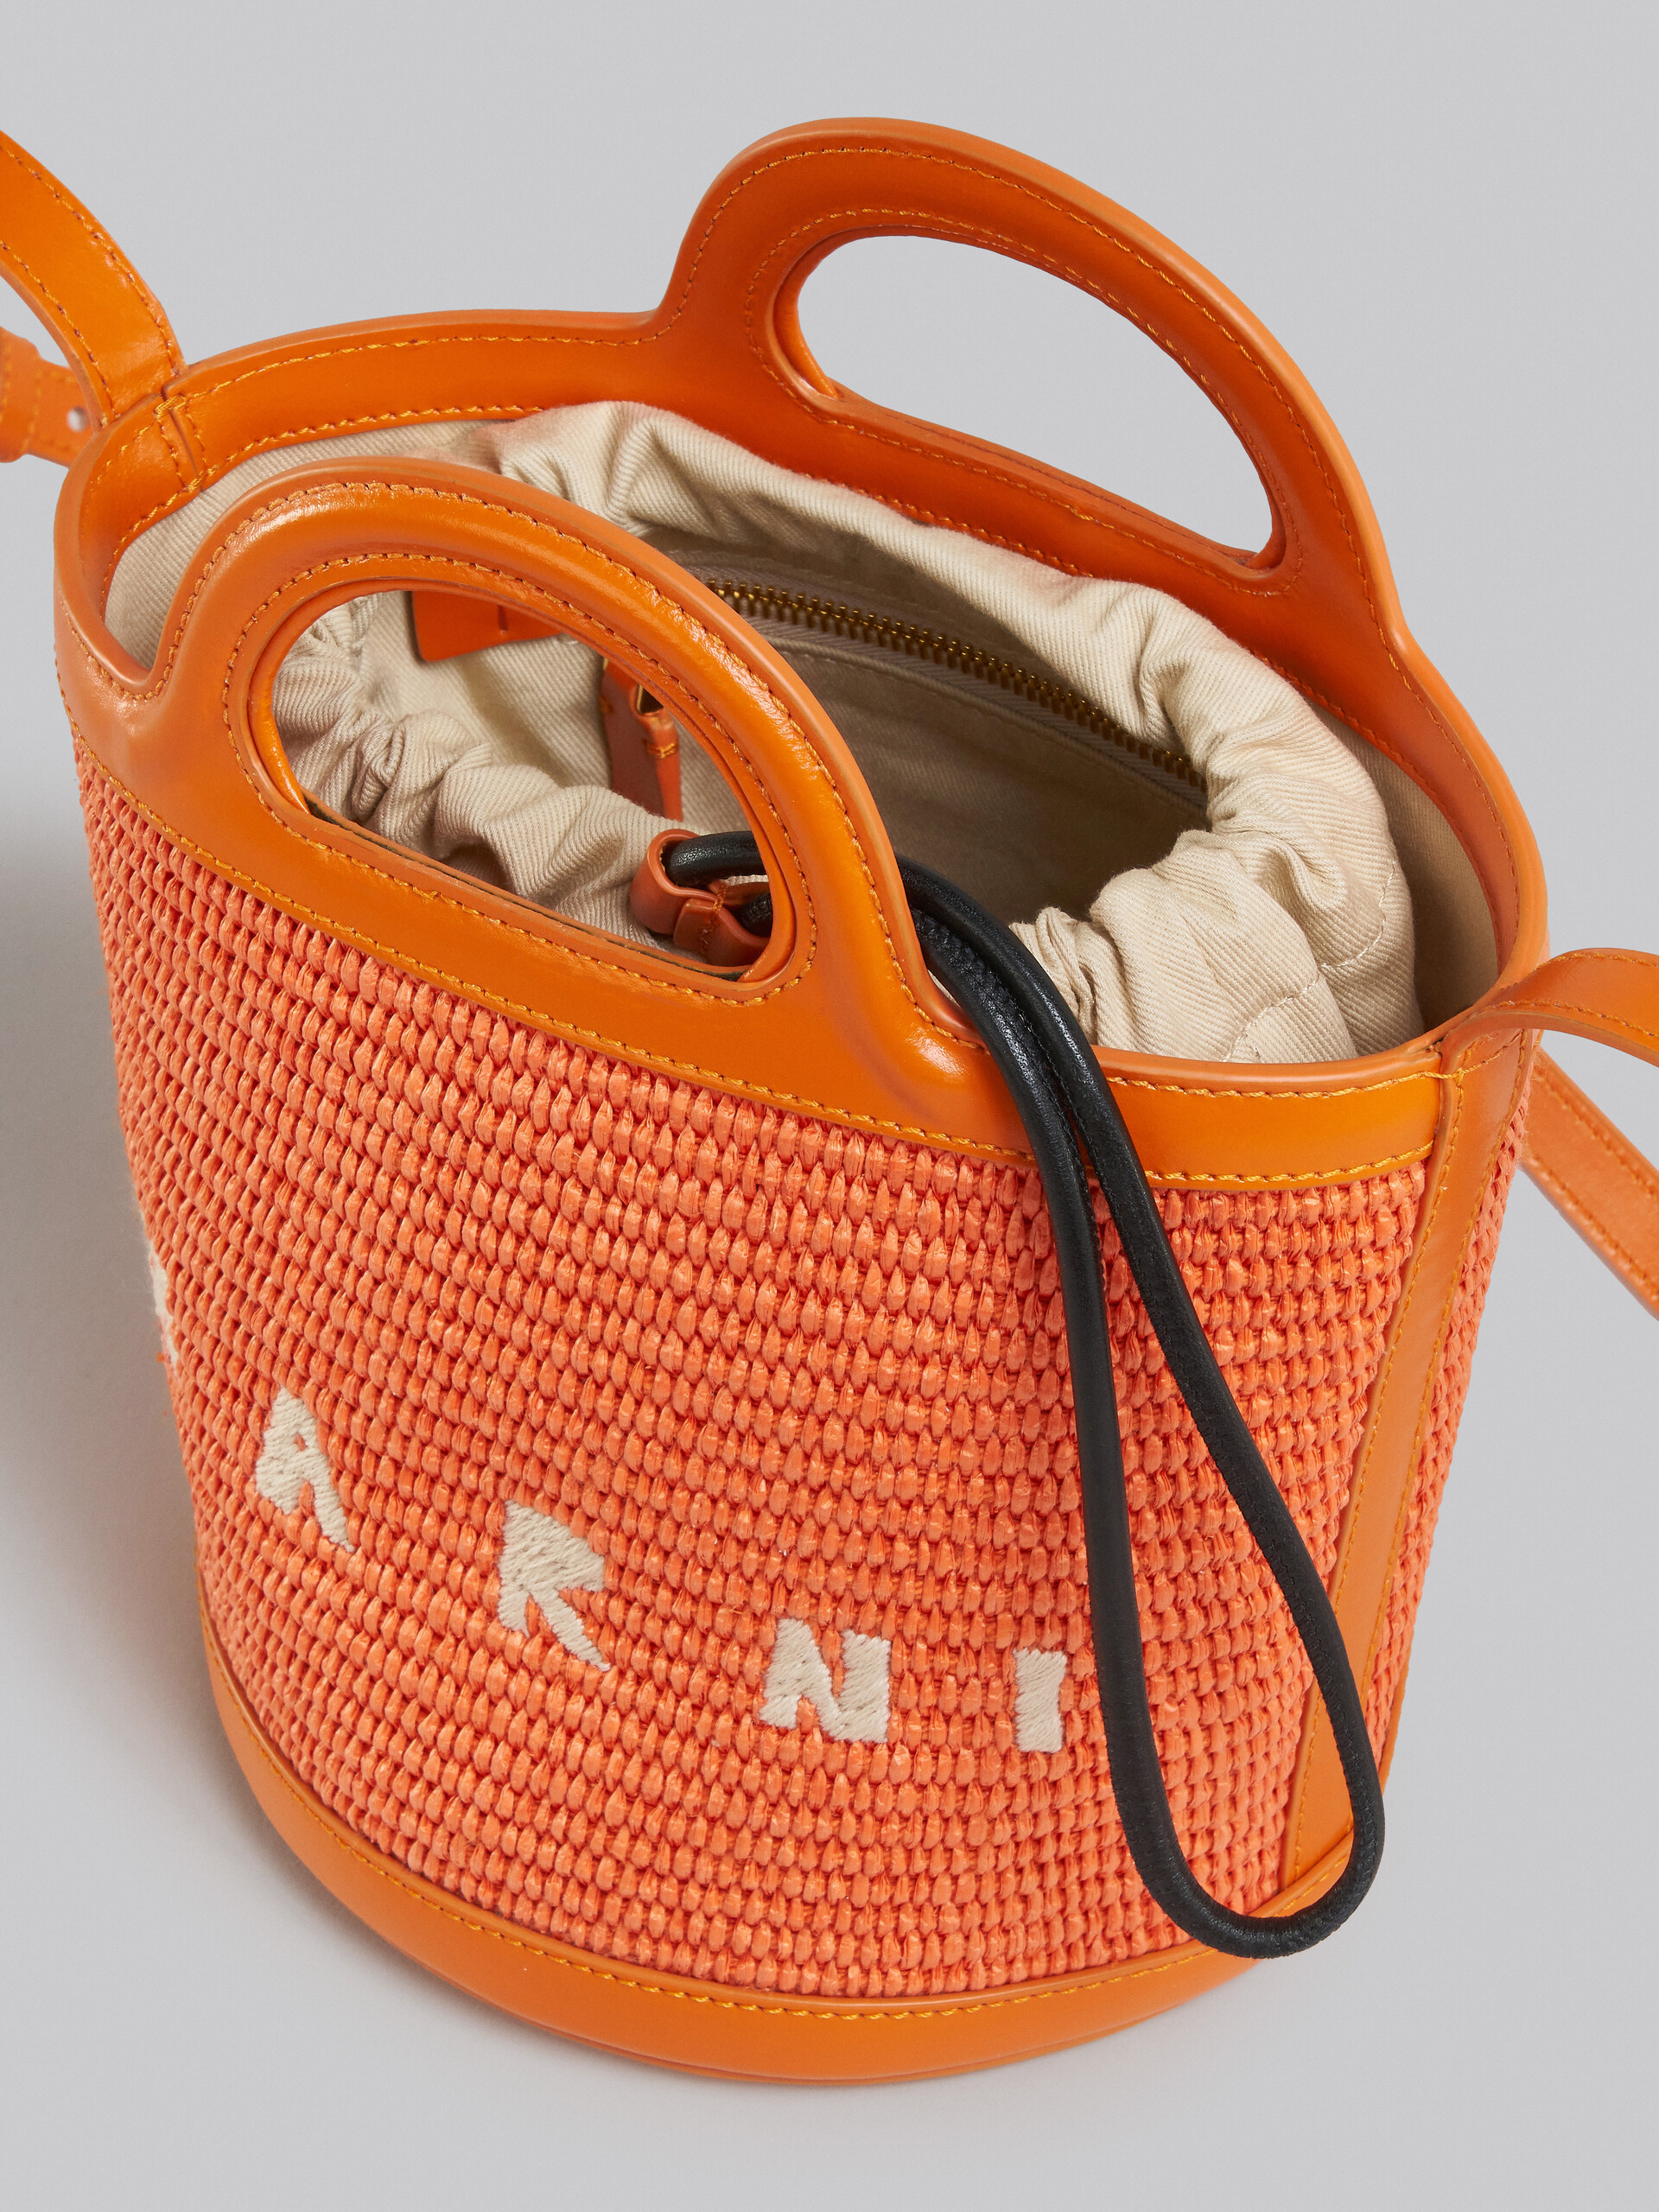 Tropicalia Small Bucket Bag in orange leather and raffia - Shoulder Bag - Image 4